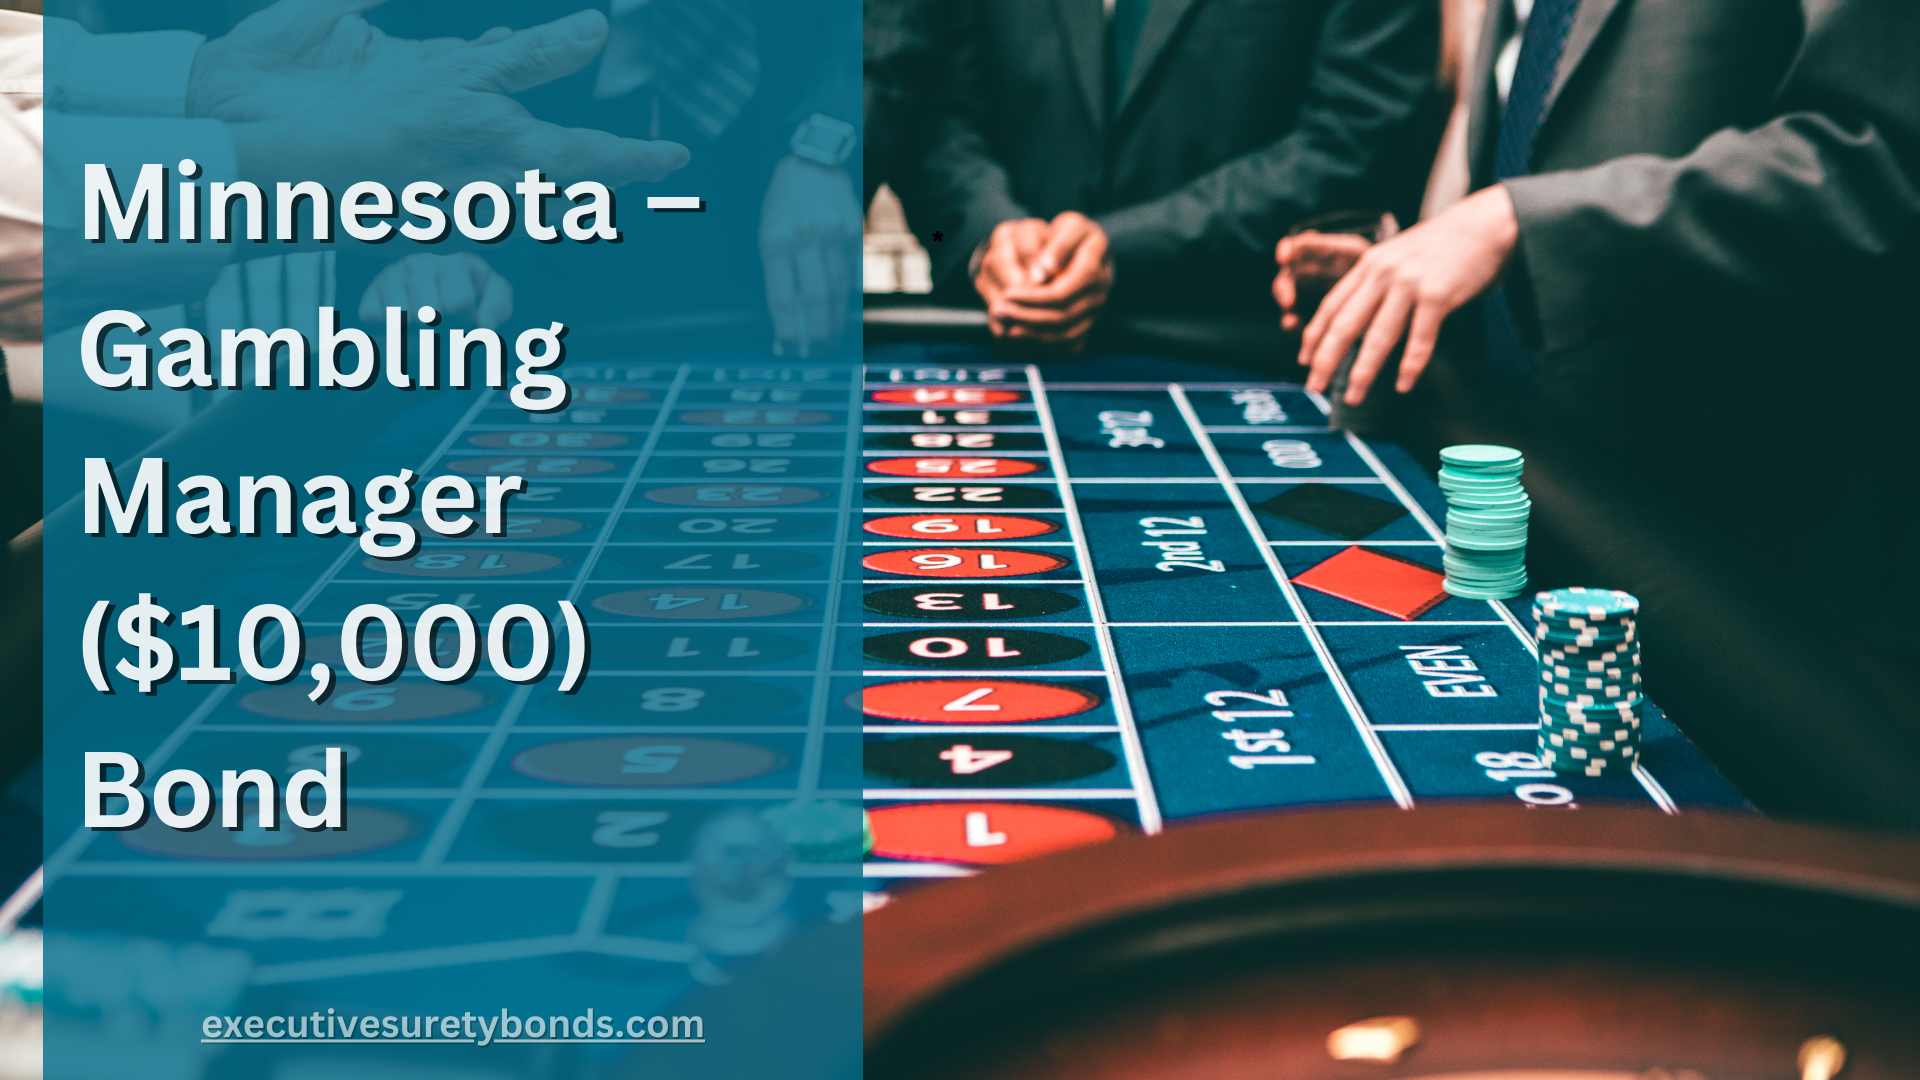 Minnesota – Gambling Manager ($10,000) Bond